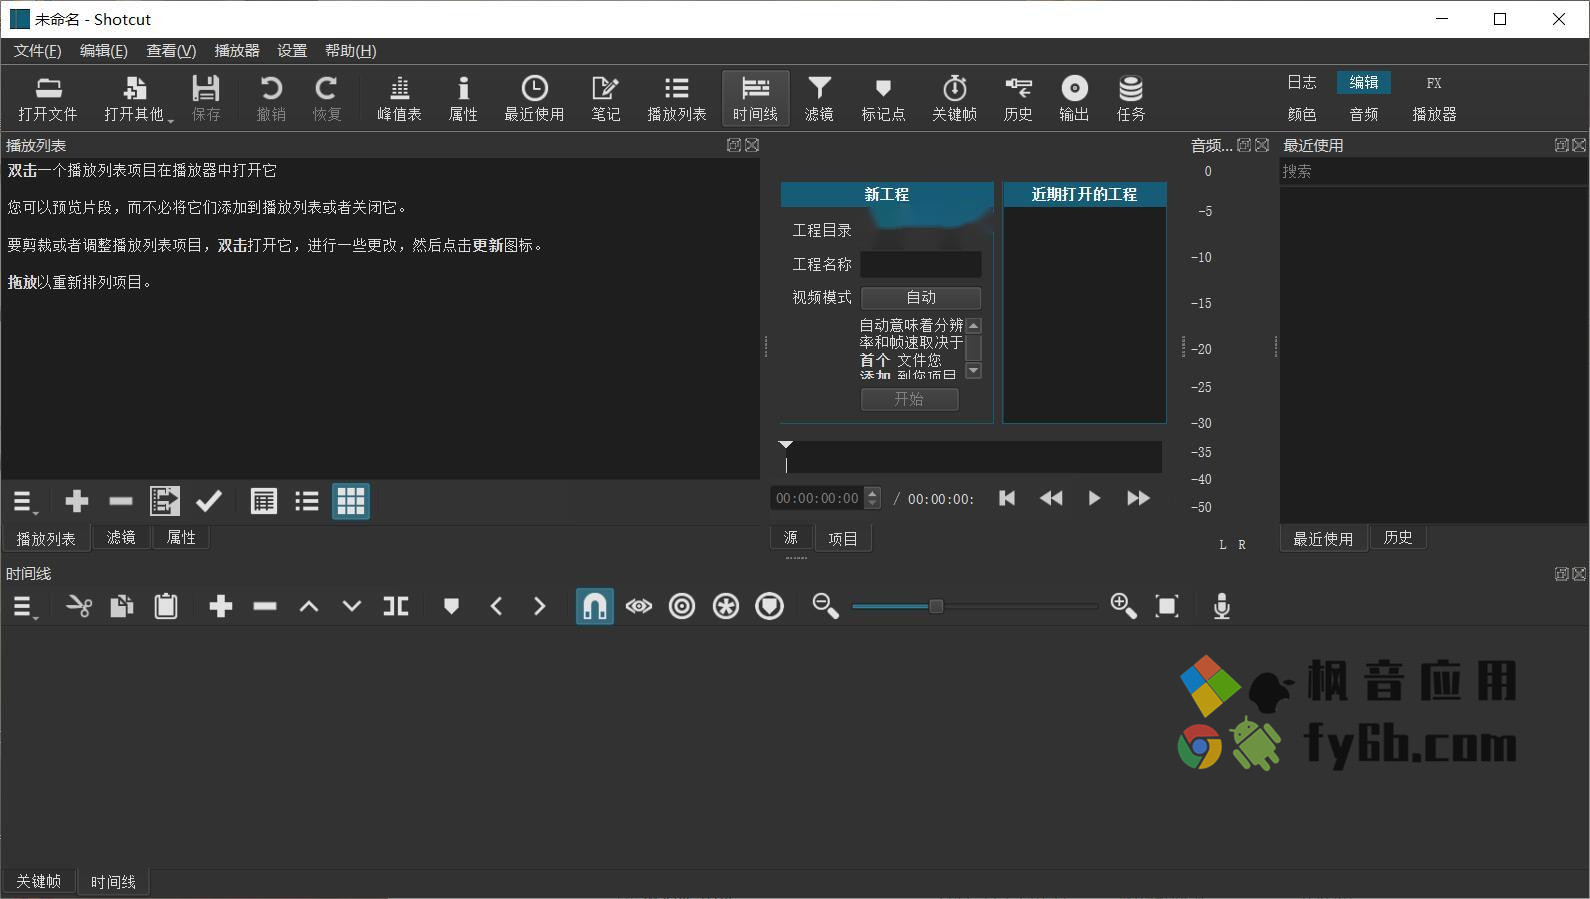 Windows Shotcut 视频编辑器_v23.06.14 中文便携版